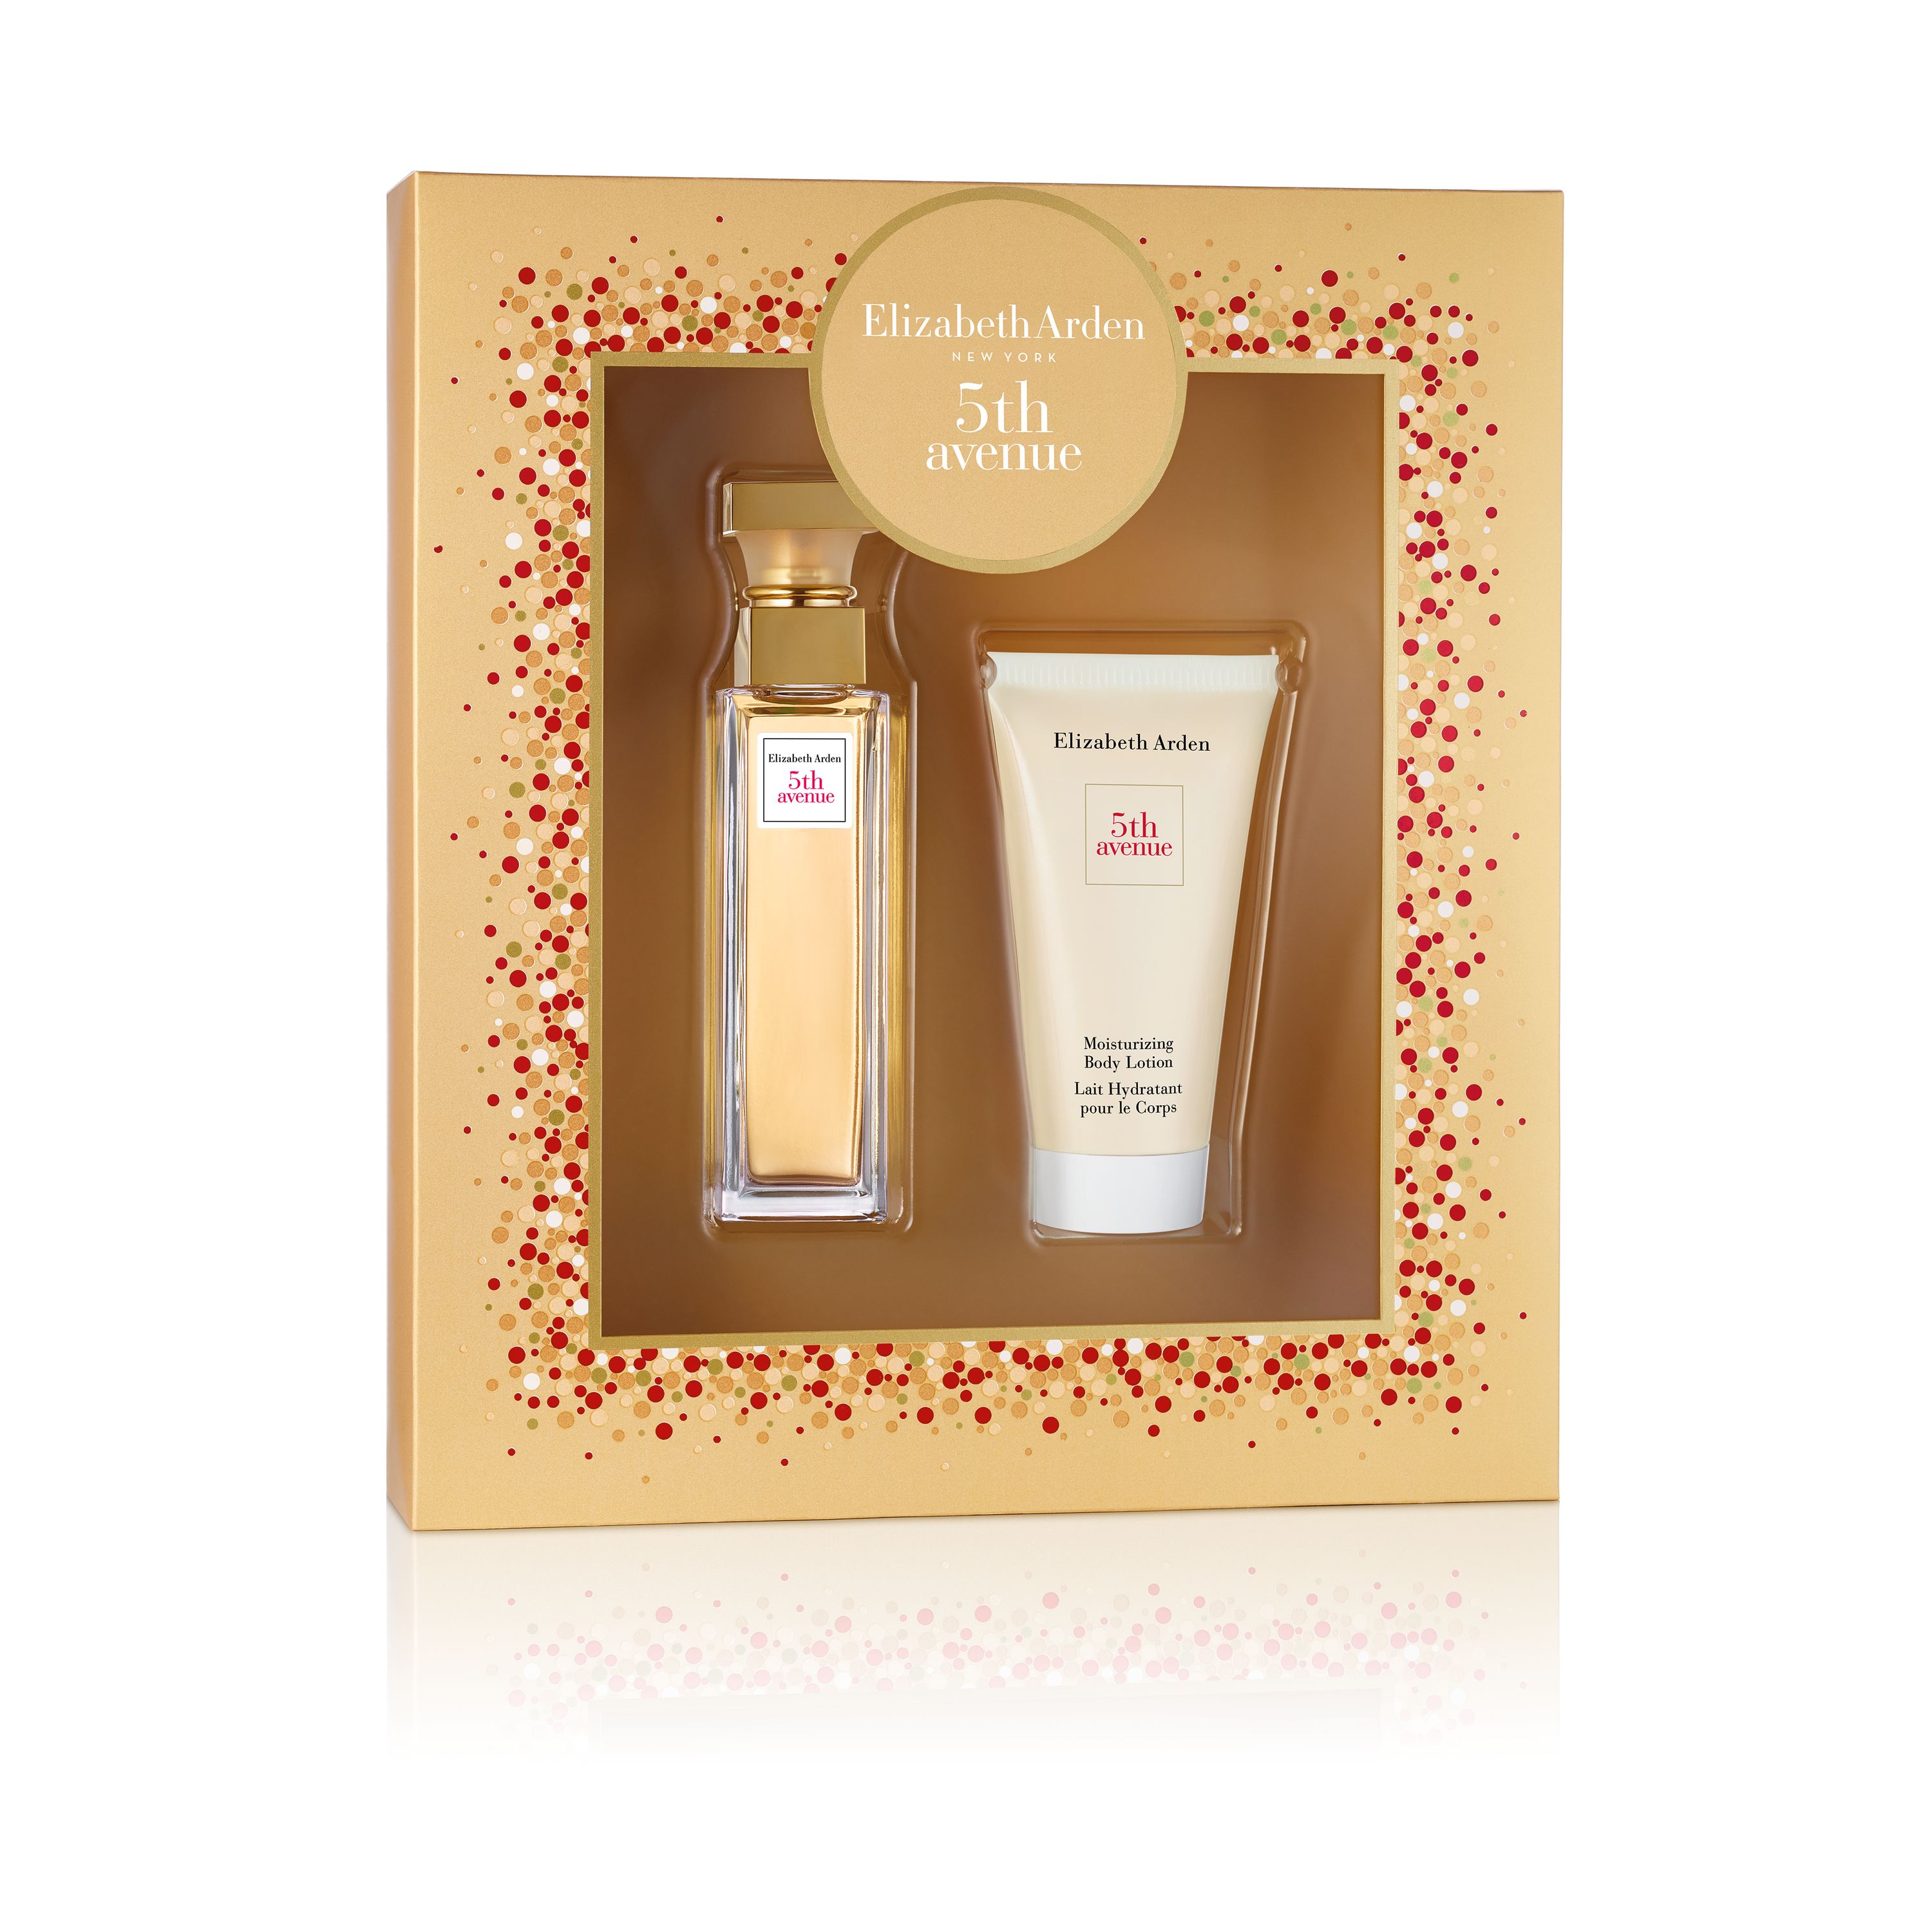 Elizabeth Arden 5th Avenue Perfume Gift Set for Women, 2 piece - image 2 of 3